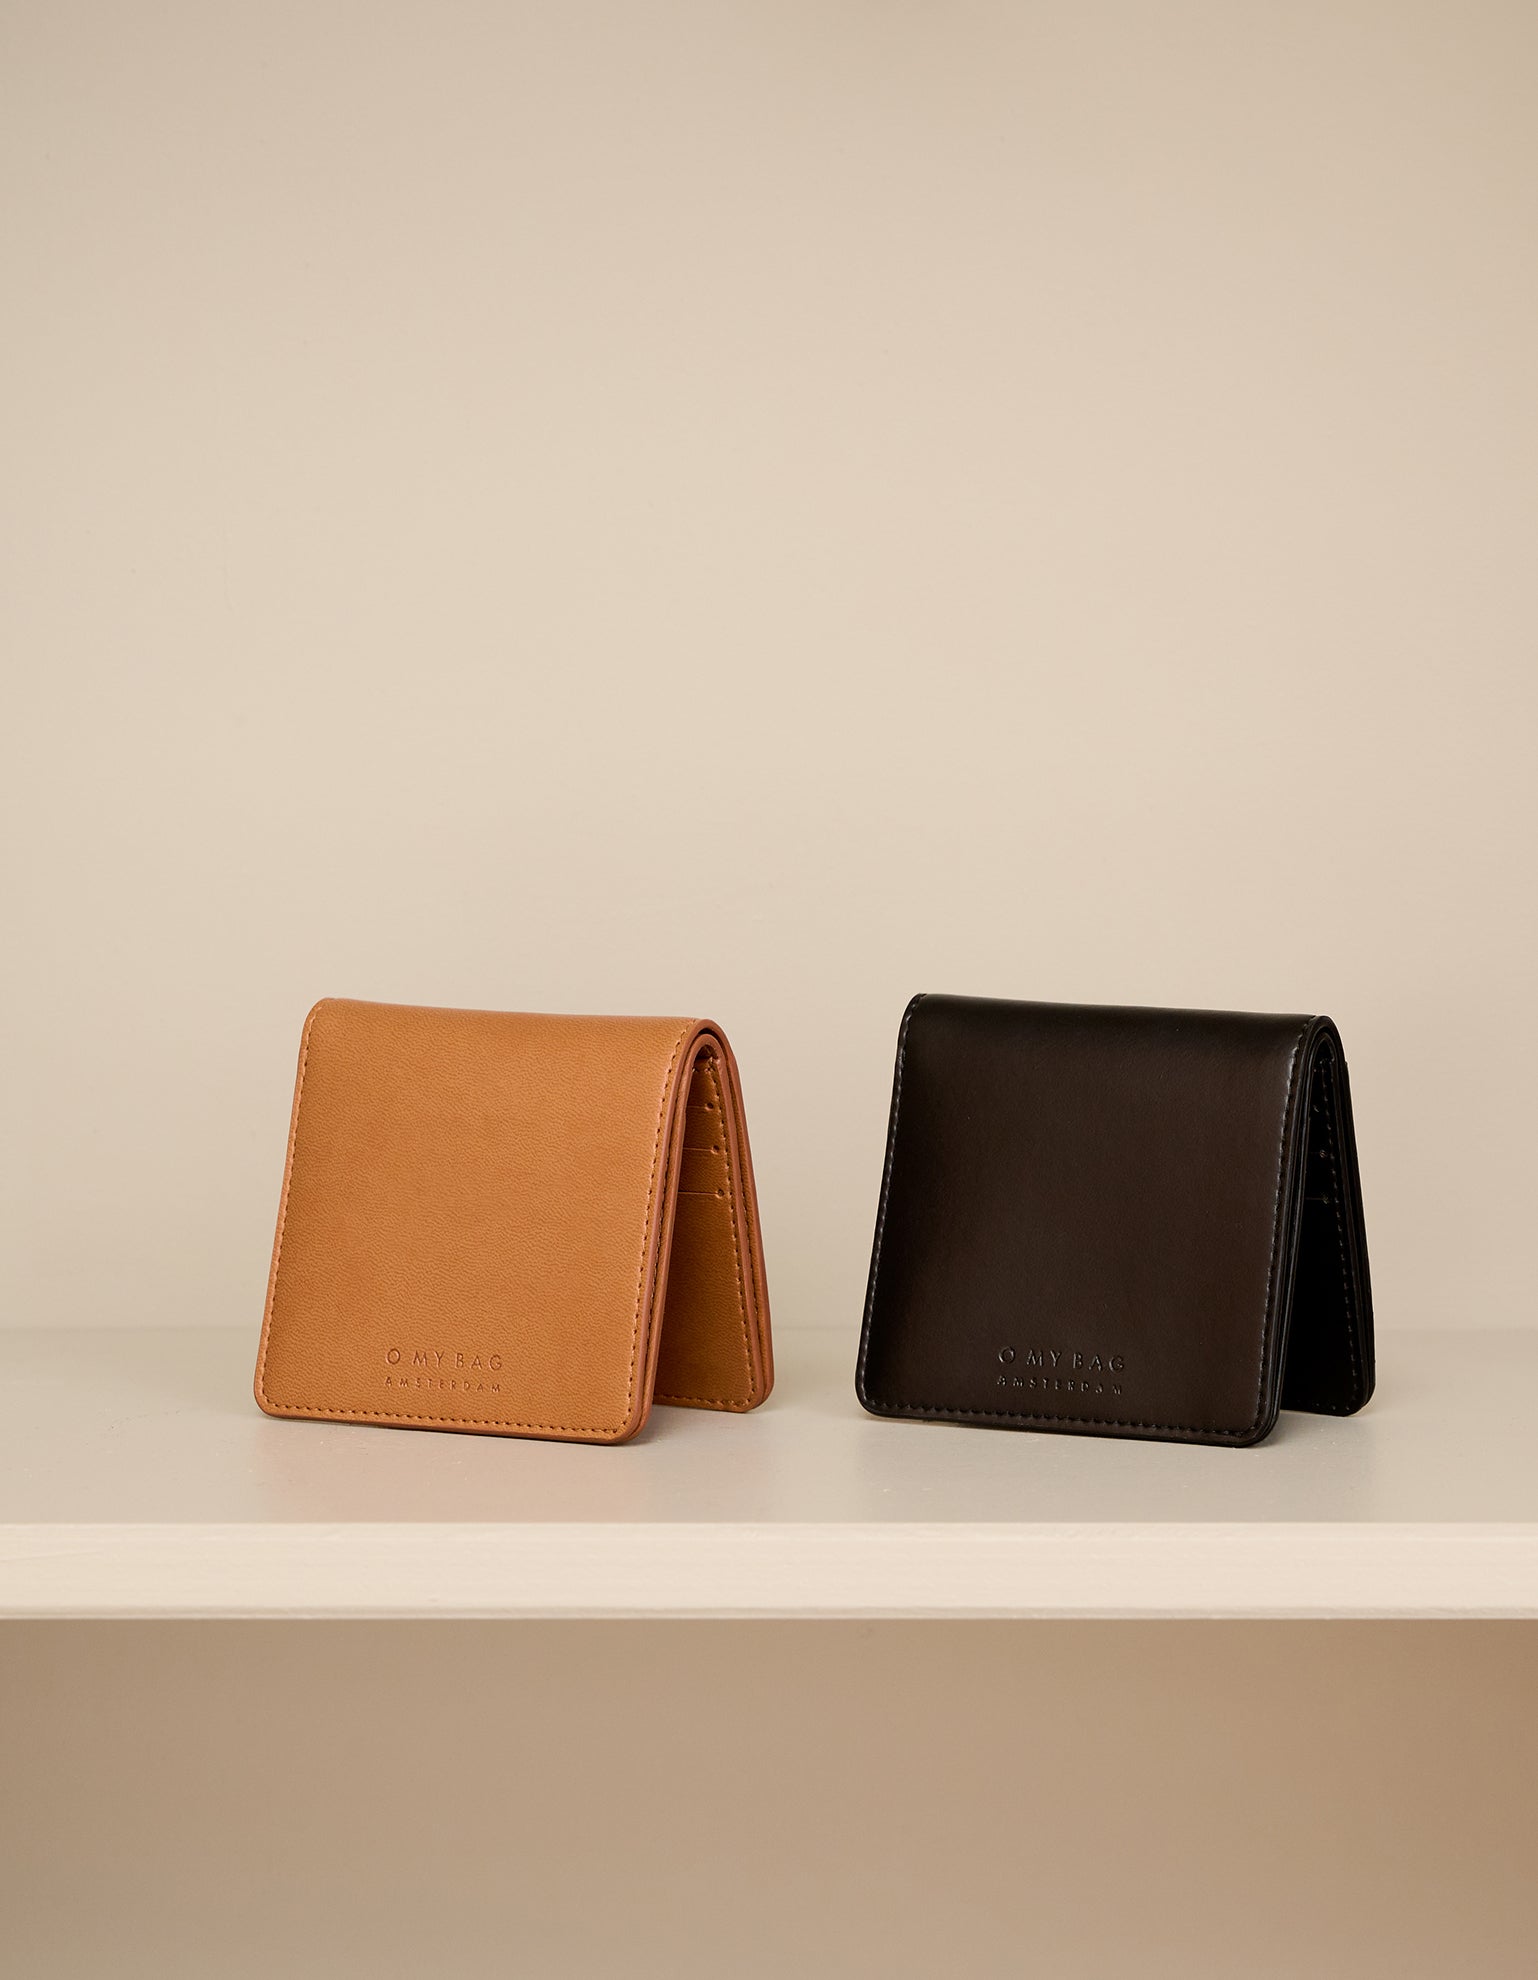 Western Studded Rhinestone Purse Handbag Matching Wallet | Purses and  handbags, Shoulder bag, Bags